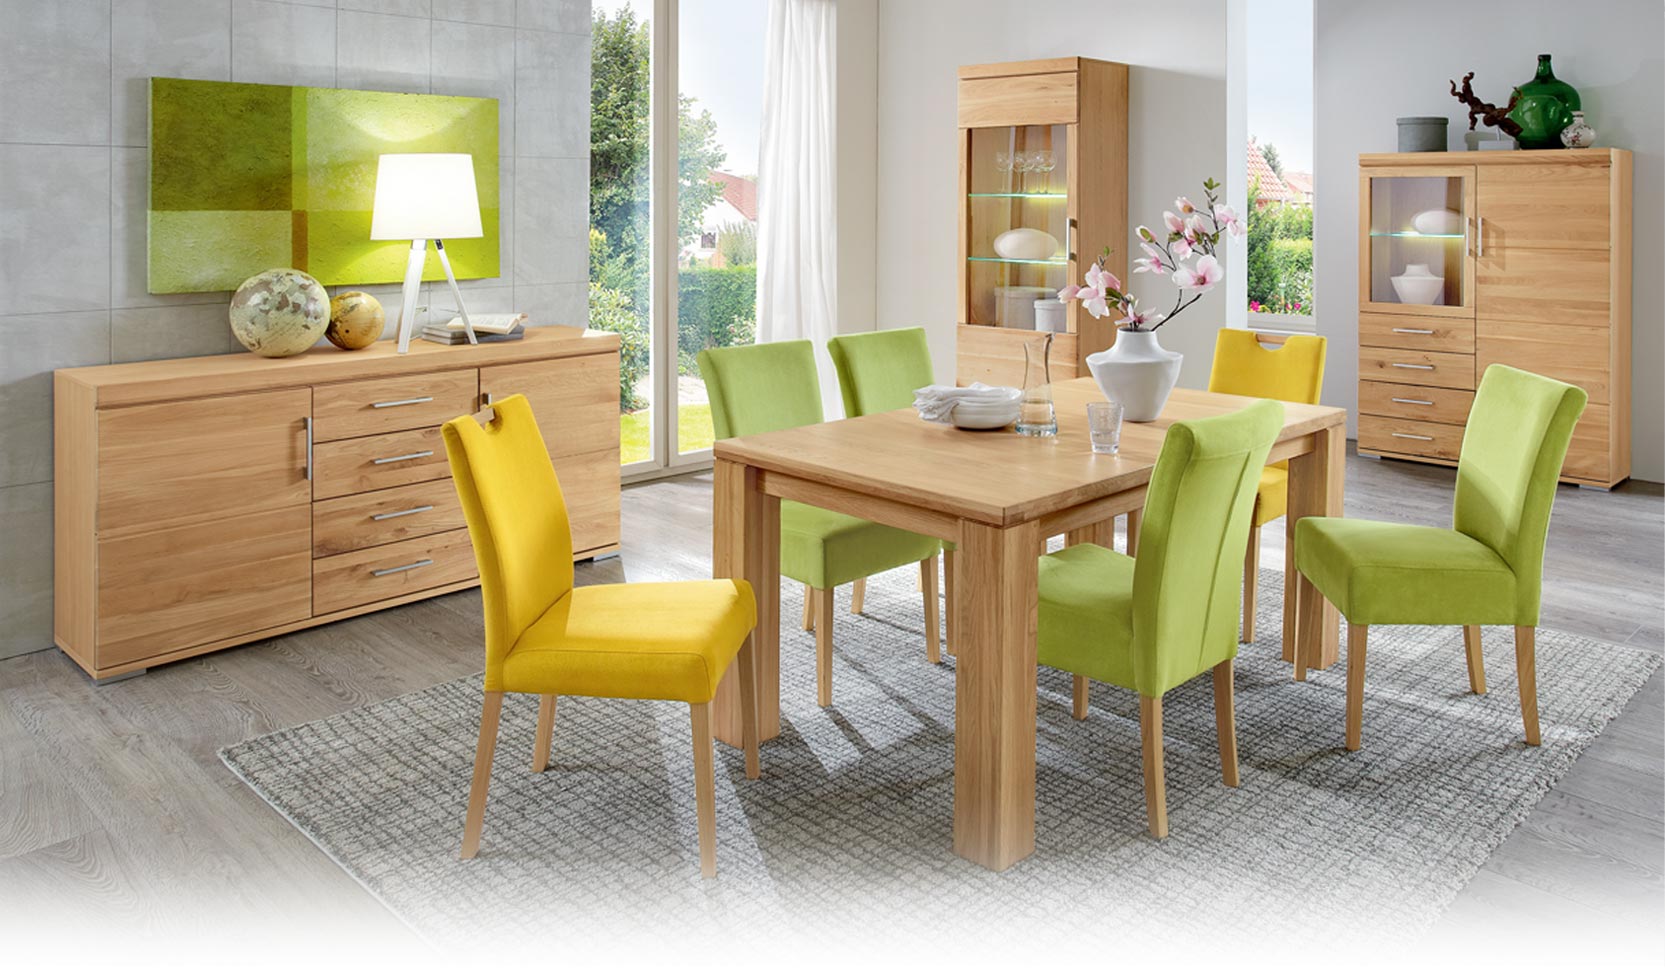 Niehoff nábytek direct k.s. are dining We furniture of manufacturer - a